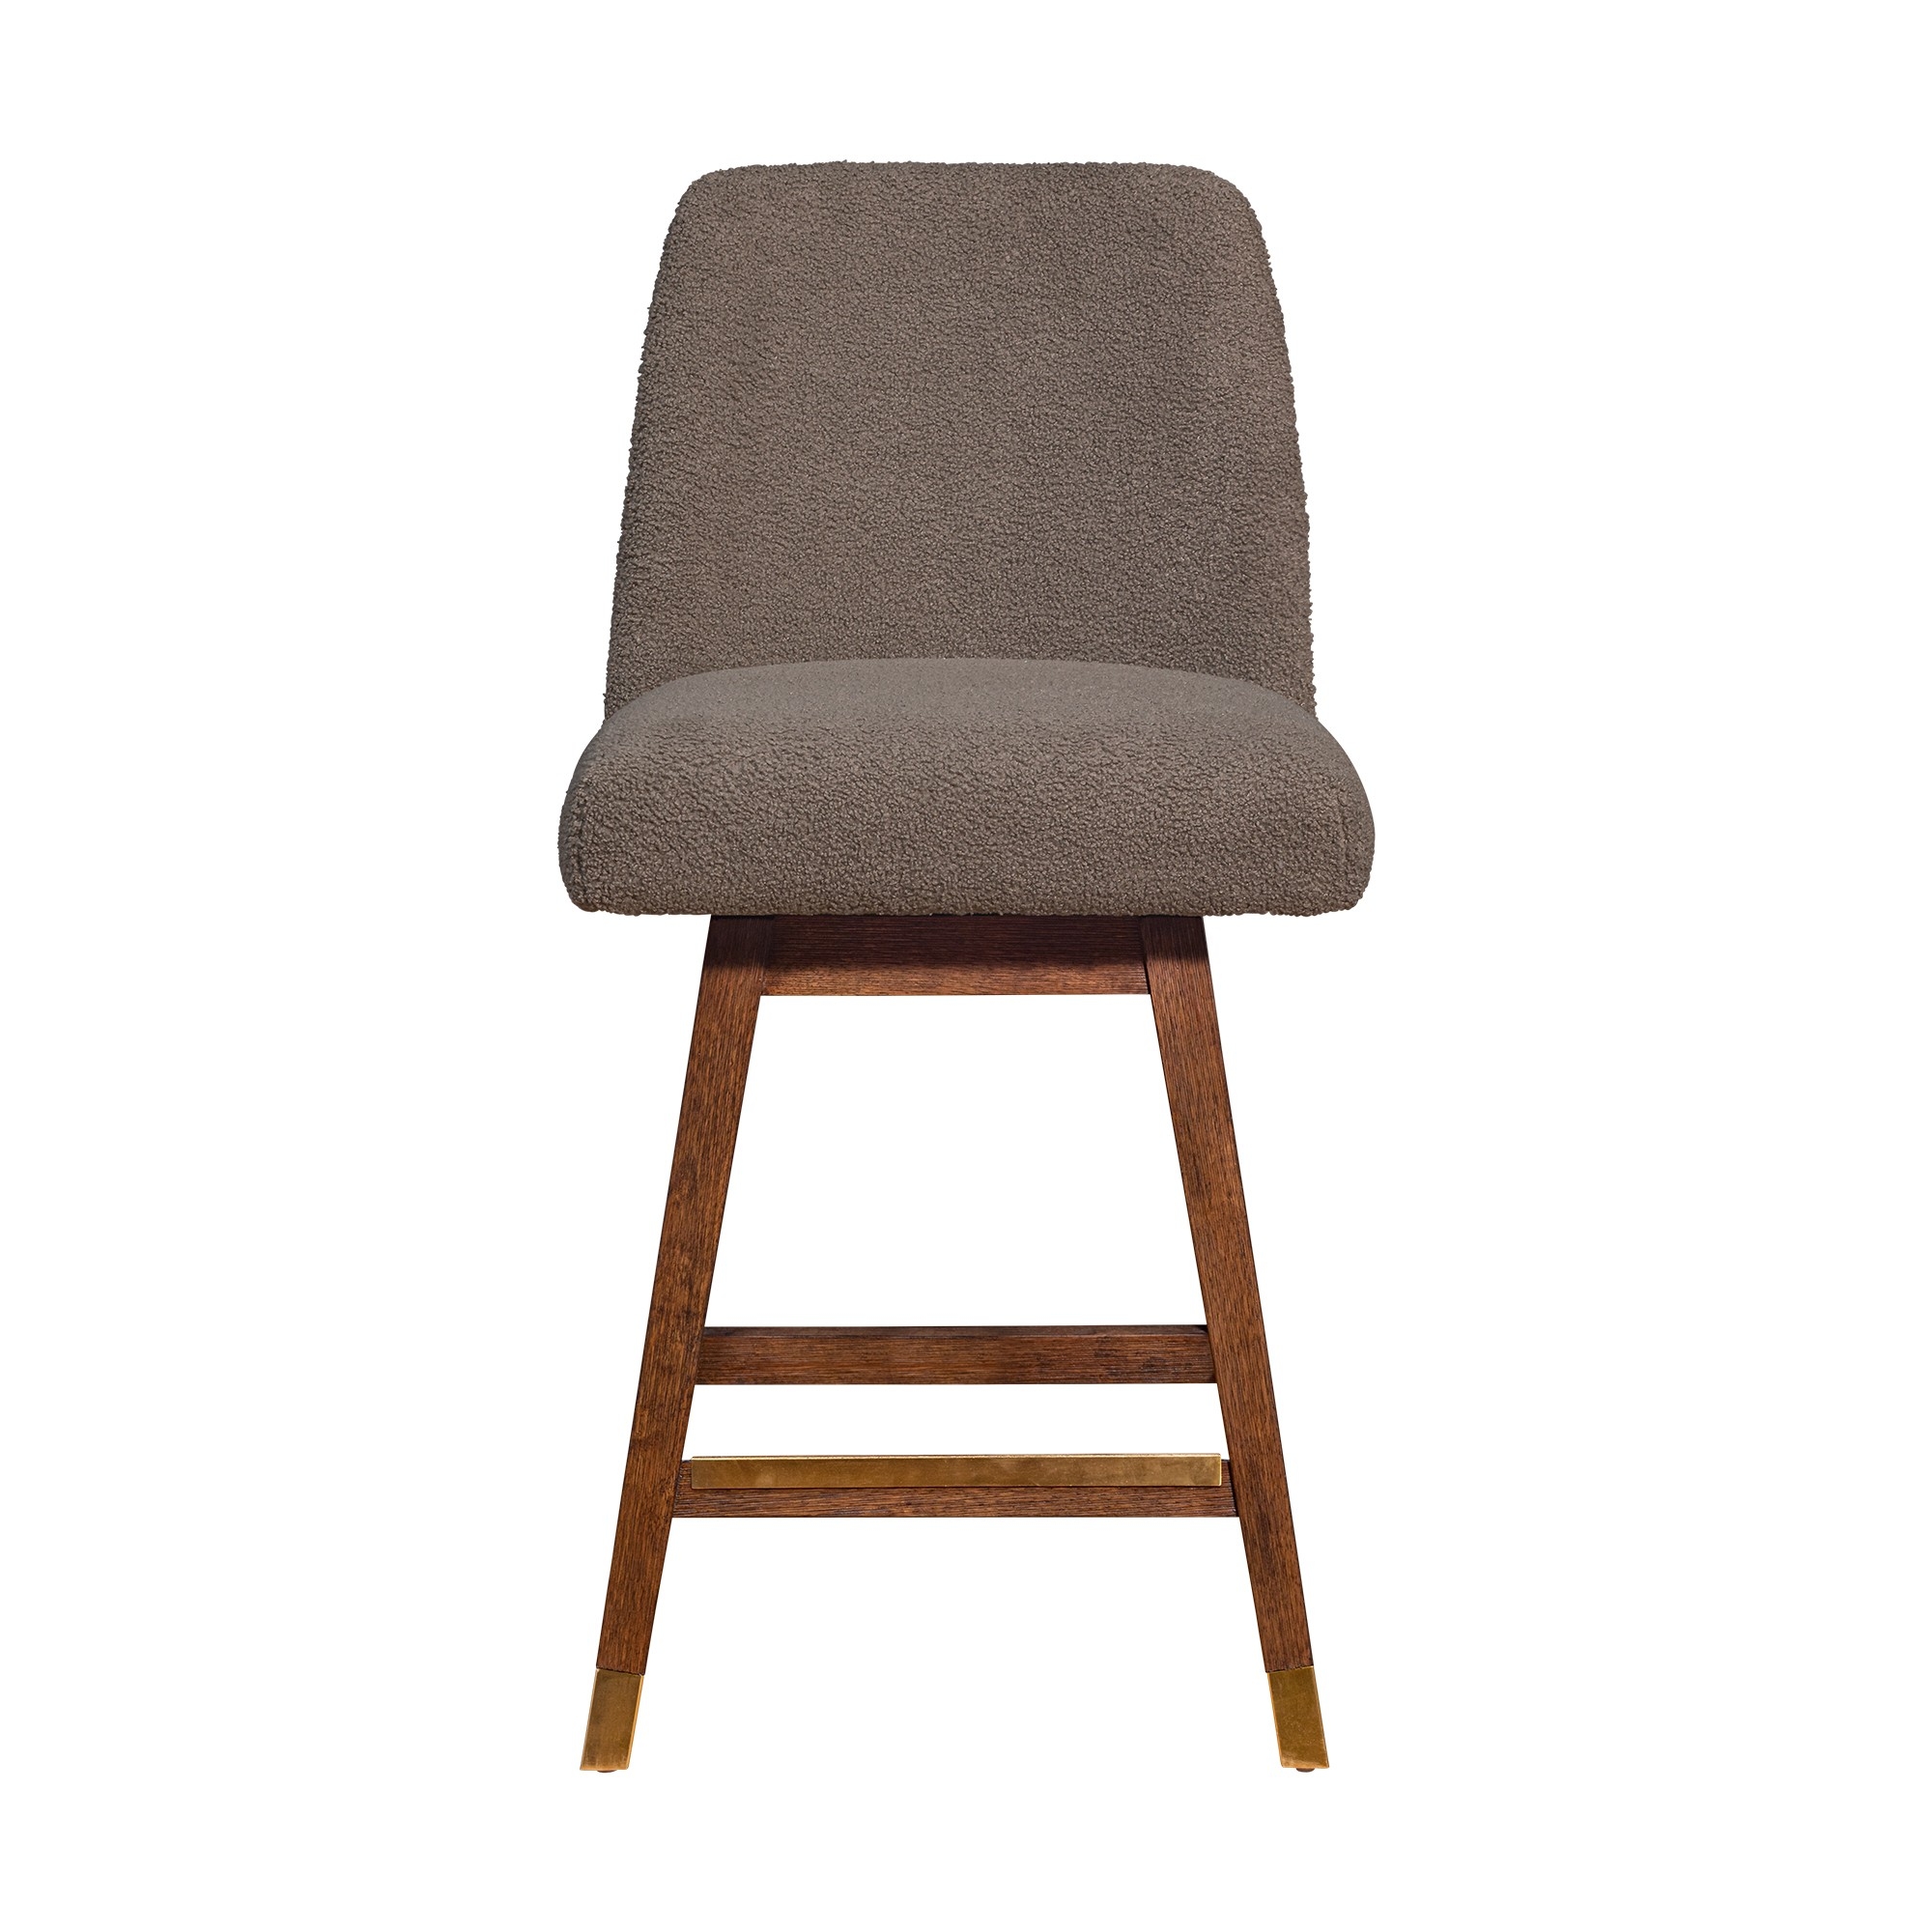 Lara 26 Inch Swivel Counter Stool Chair, Taupe Boucle, Brown Wood Legs- Saltoro Sherpi